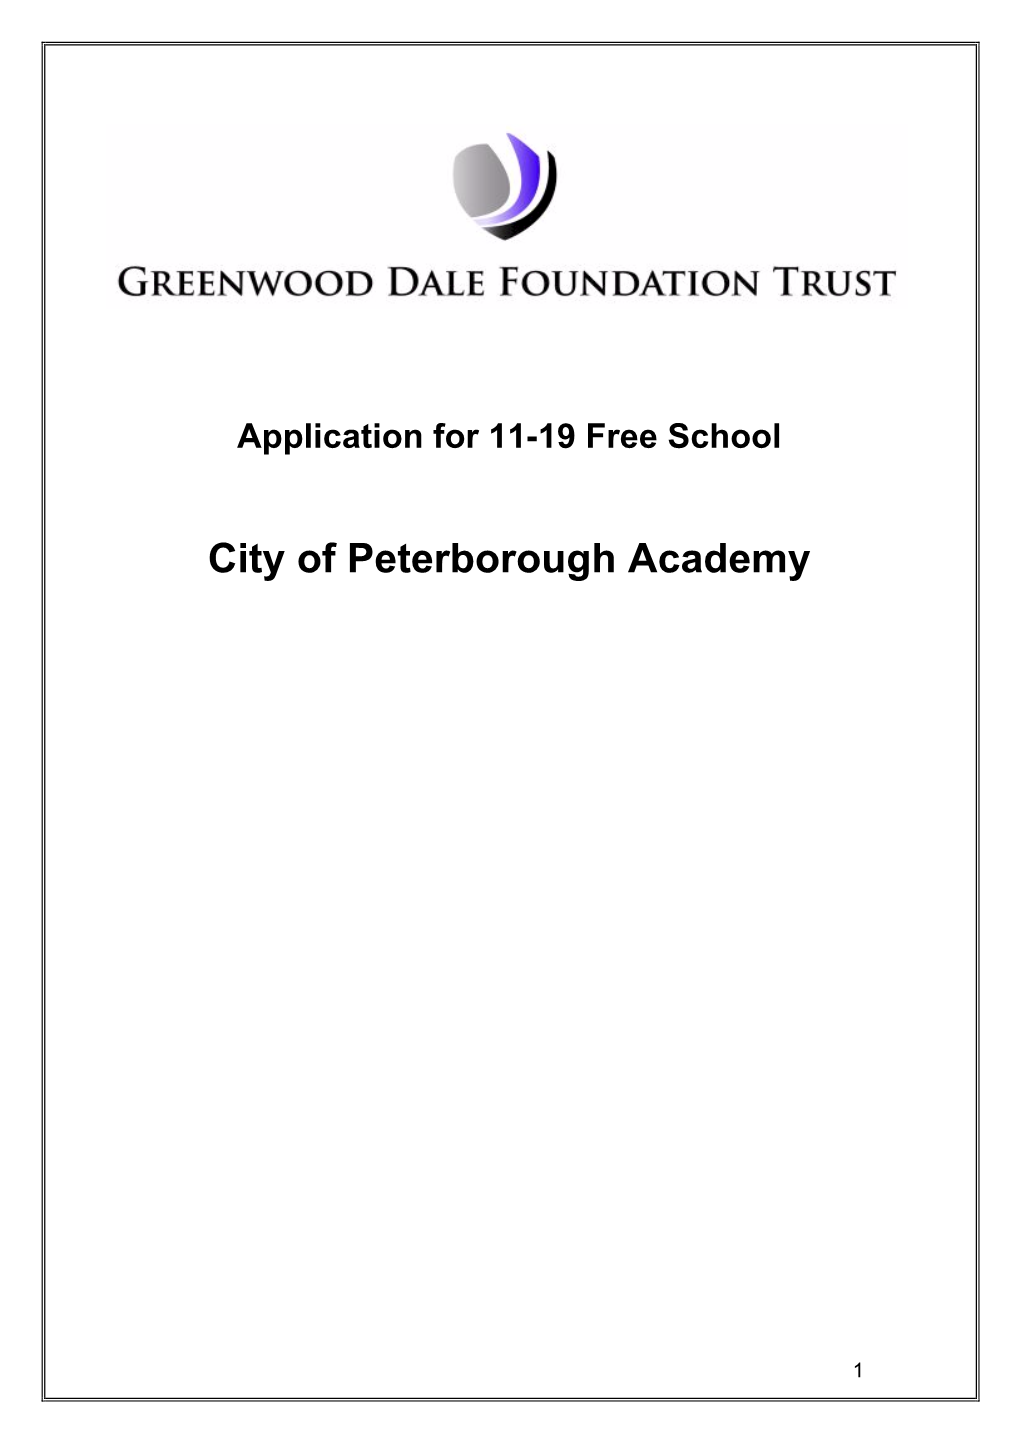 City of Peterborough Academy